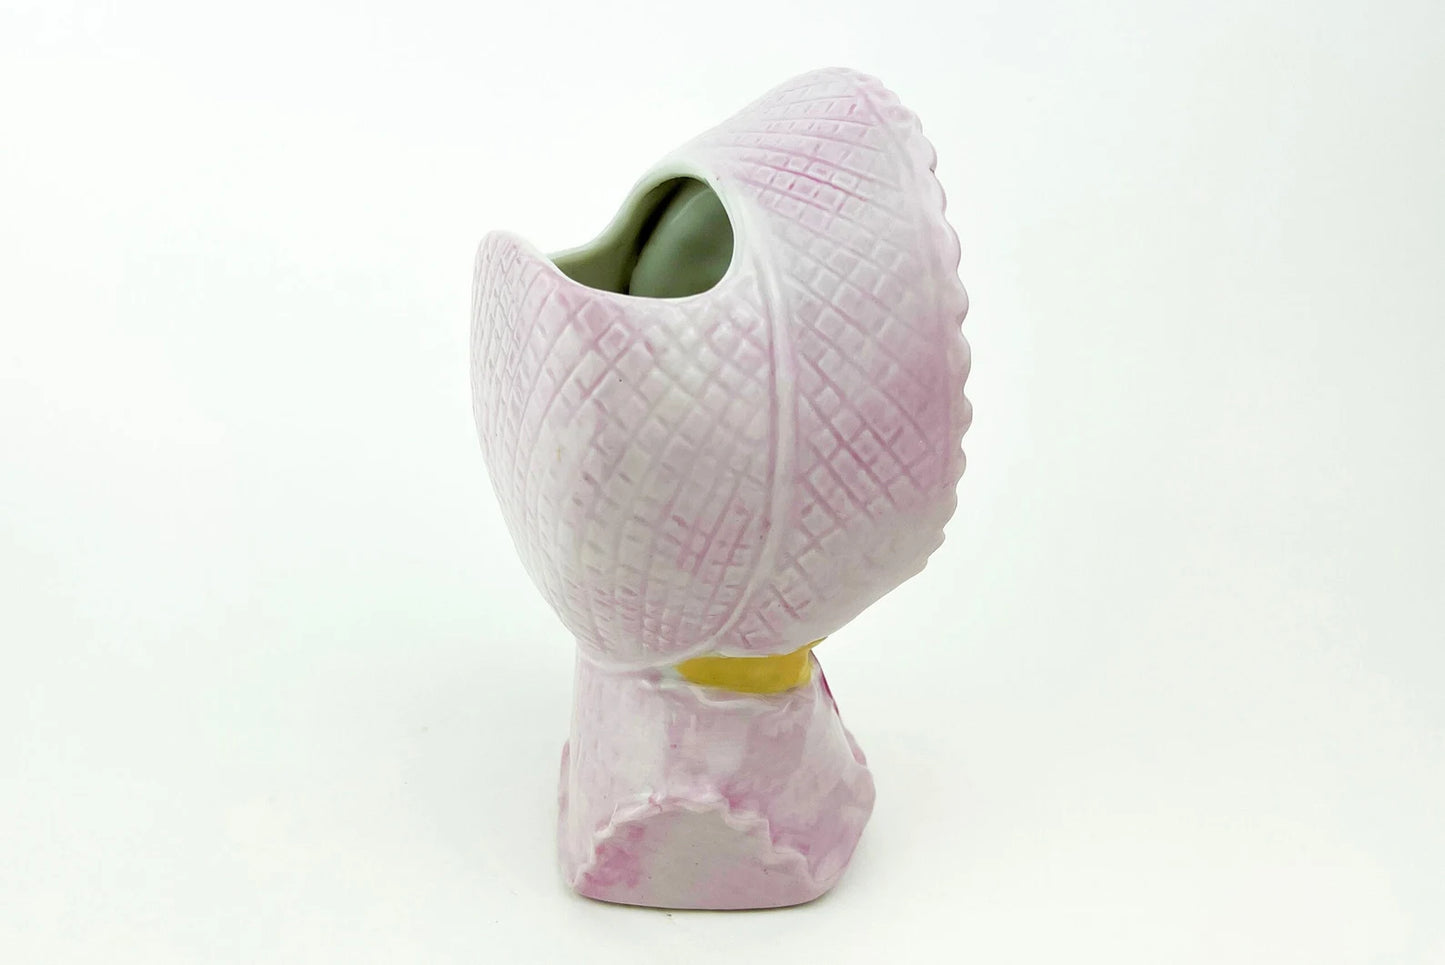 Vintage Baby Girl Ceramic Head Vase, Pink/lavender, Flower buds on Pink Bonnet, Whimsical Planter Mid Century Kitschy Nursery Decor UCAGCO